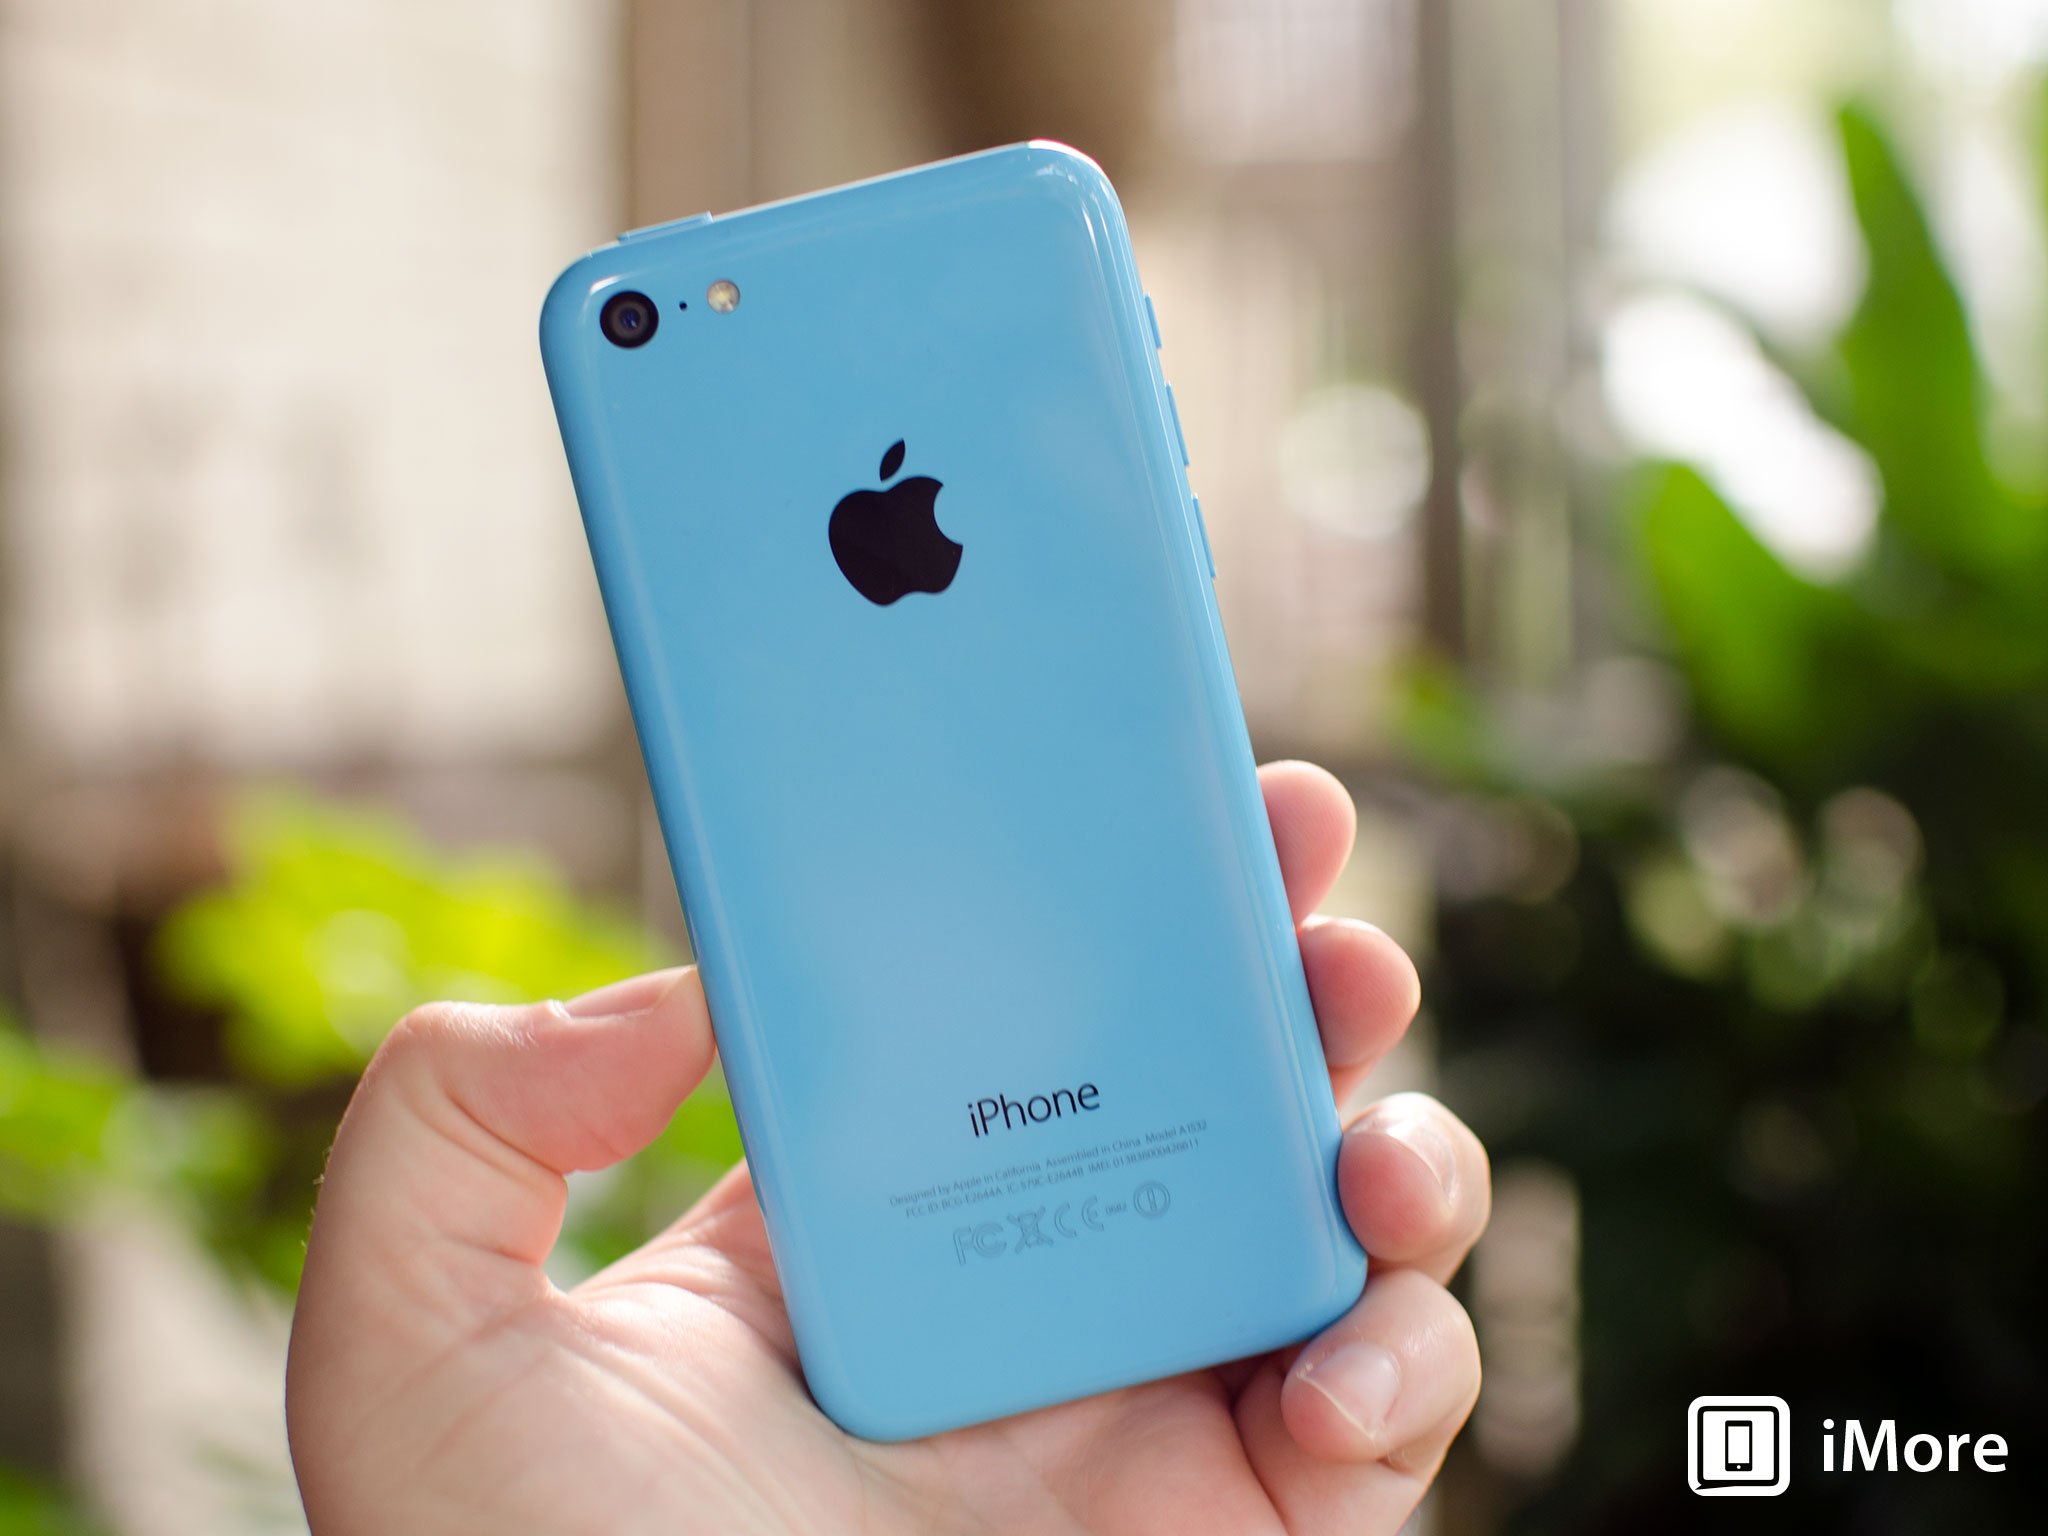 iphone 5c blue wallpaper